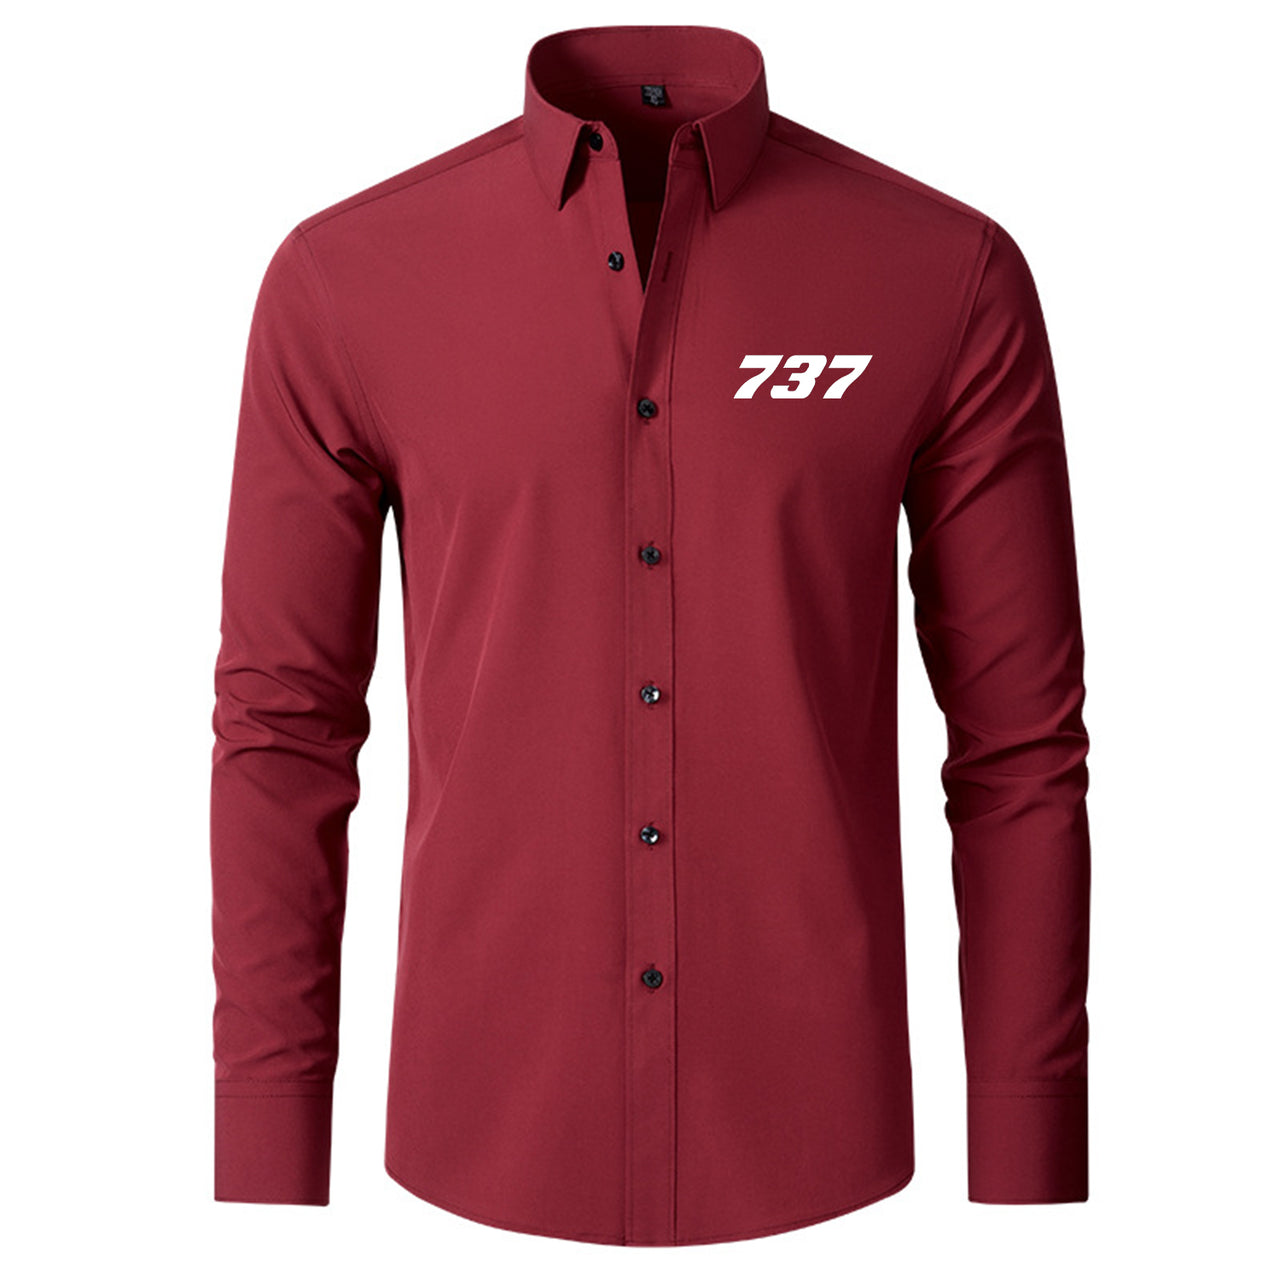 737 Flat Text Designed Long Sleeve Shirts